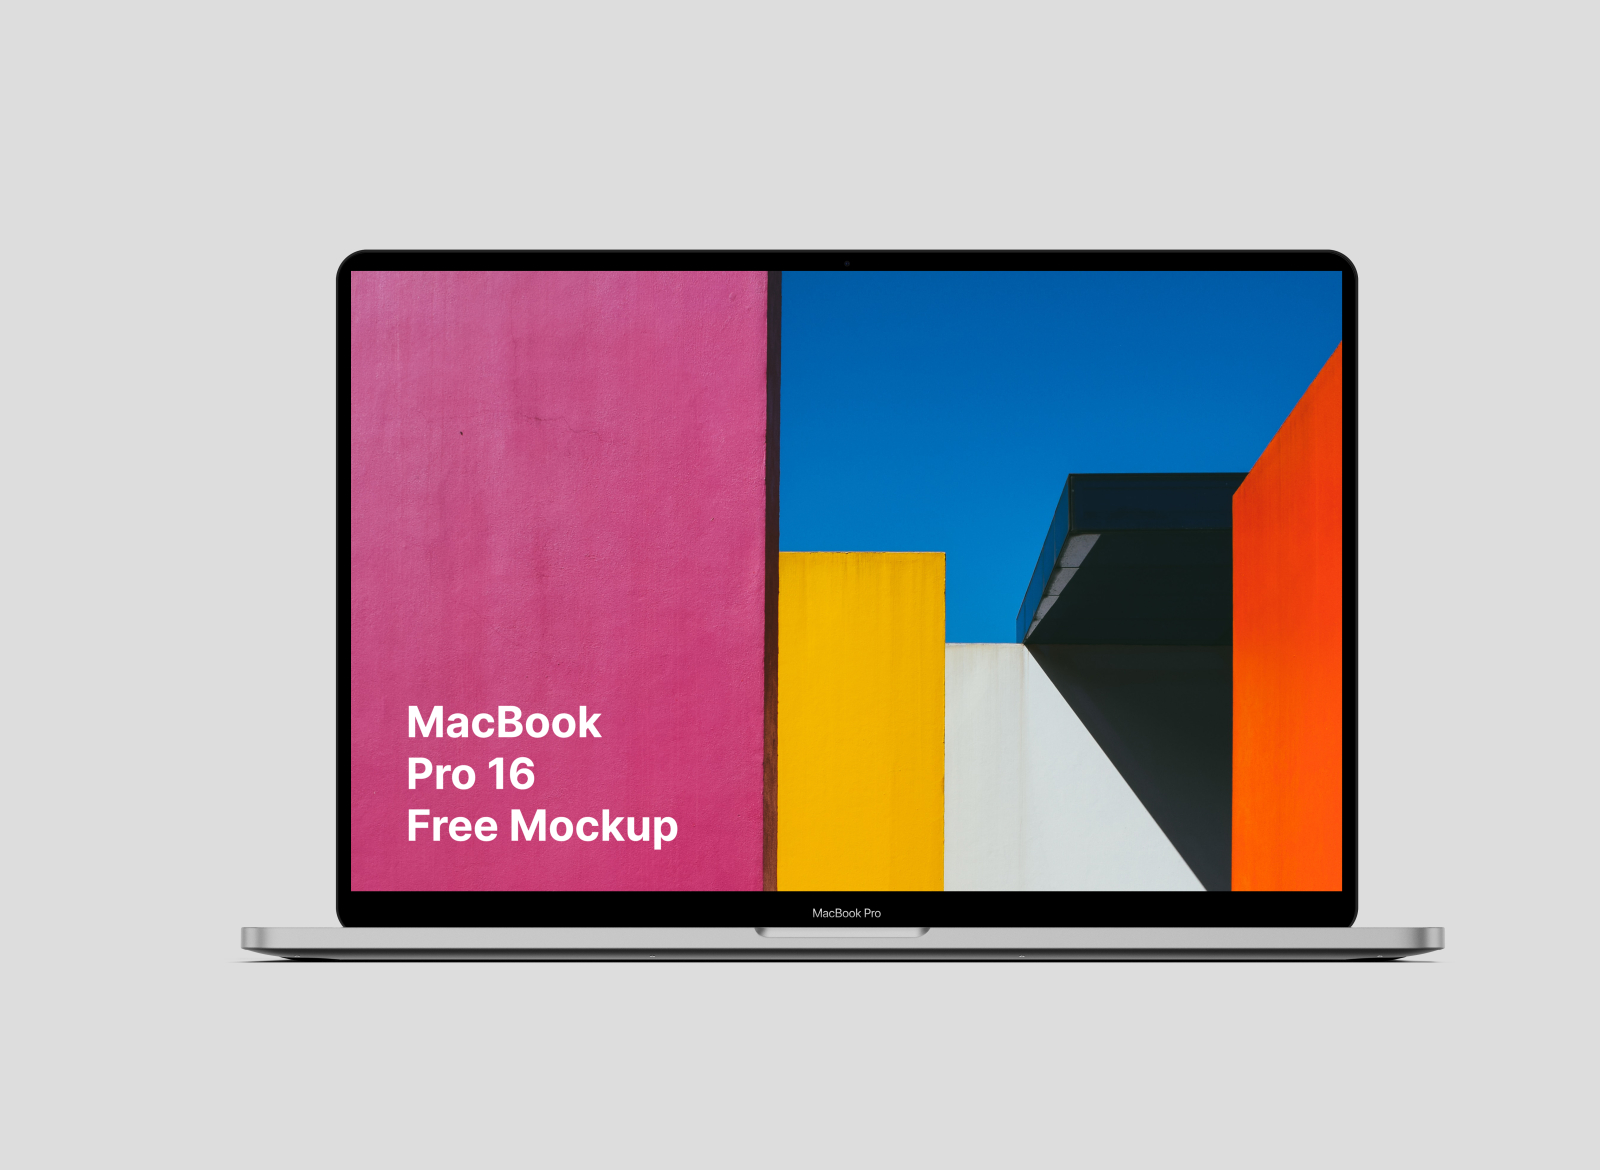 Free MacBook Pro 16 Mockup macbook pro 16 mockup macbook pro 16 mockup 16 macbook pro 16 macbook pro 16 macbook apple free psd lstore download mockup c4d 3d